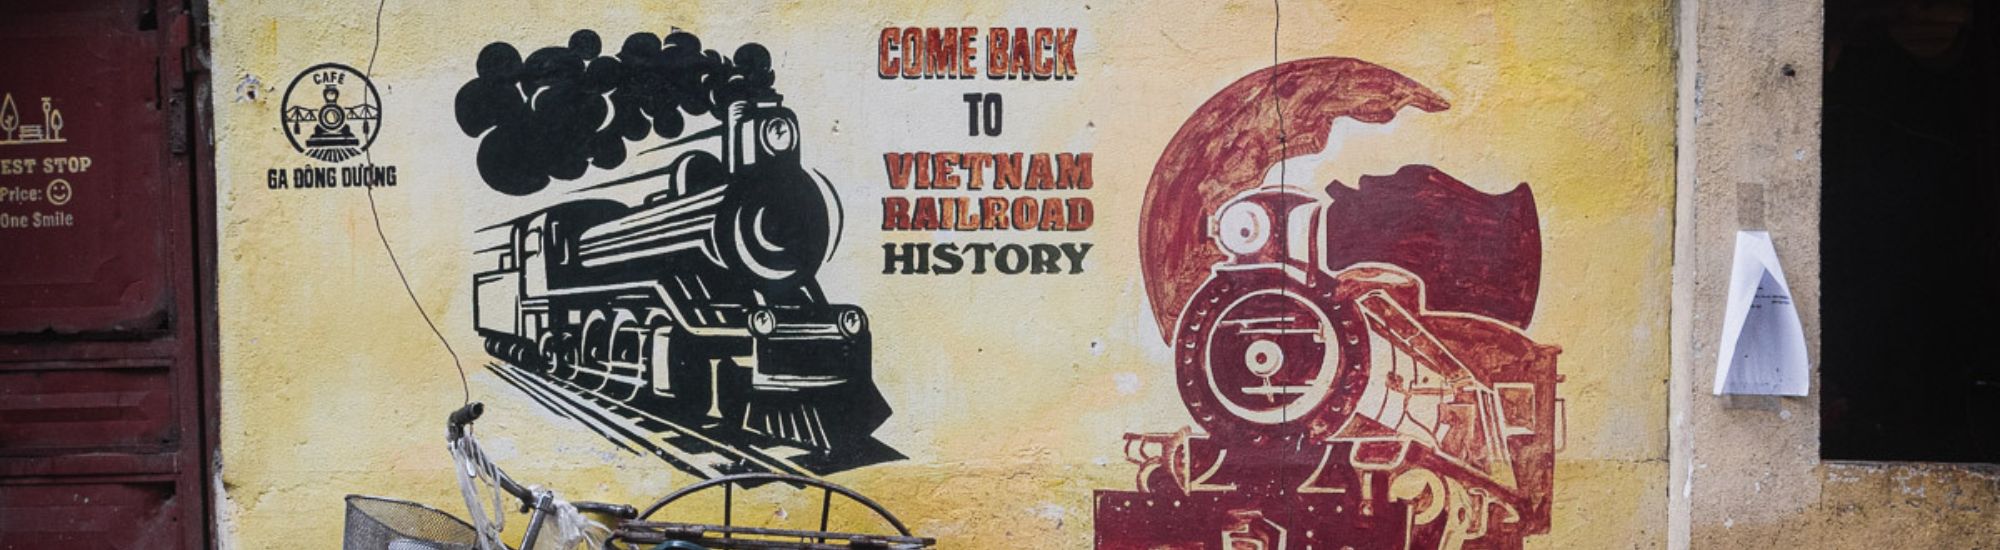 AA-Hanoi-Railway-Coffee-Banner